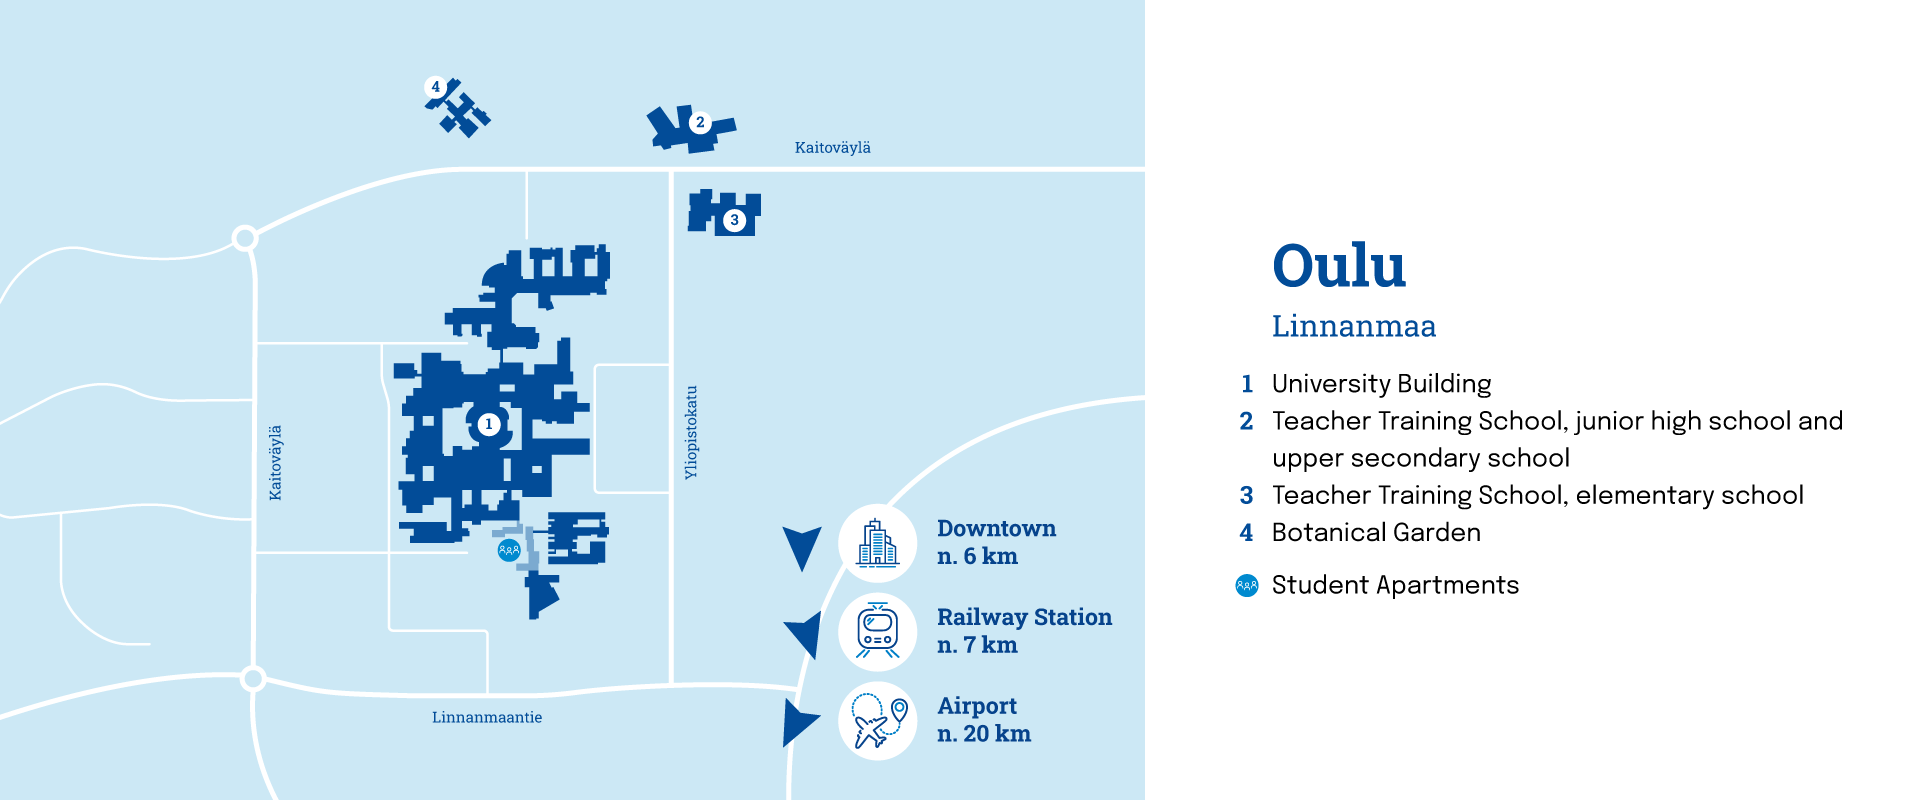 map of Oulu Linnanmaa campus